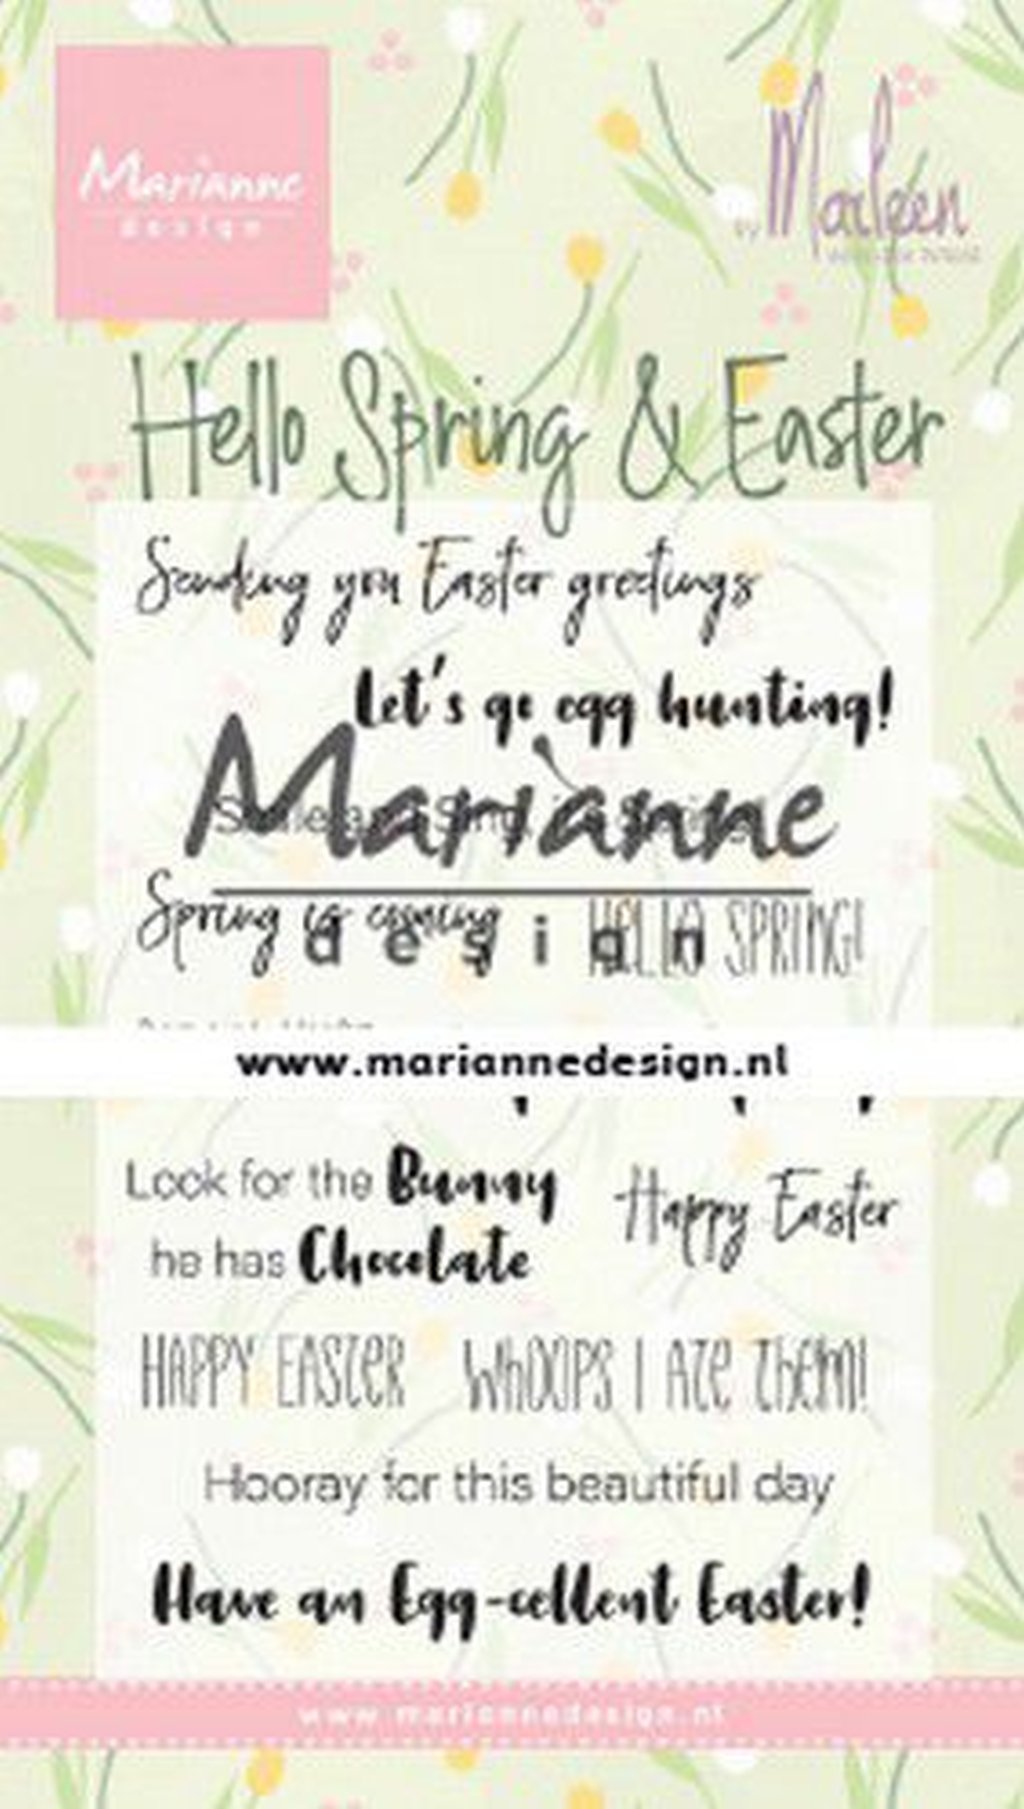 clearstamp marianne design CS1044 Hello Spring & Easter